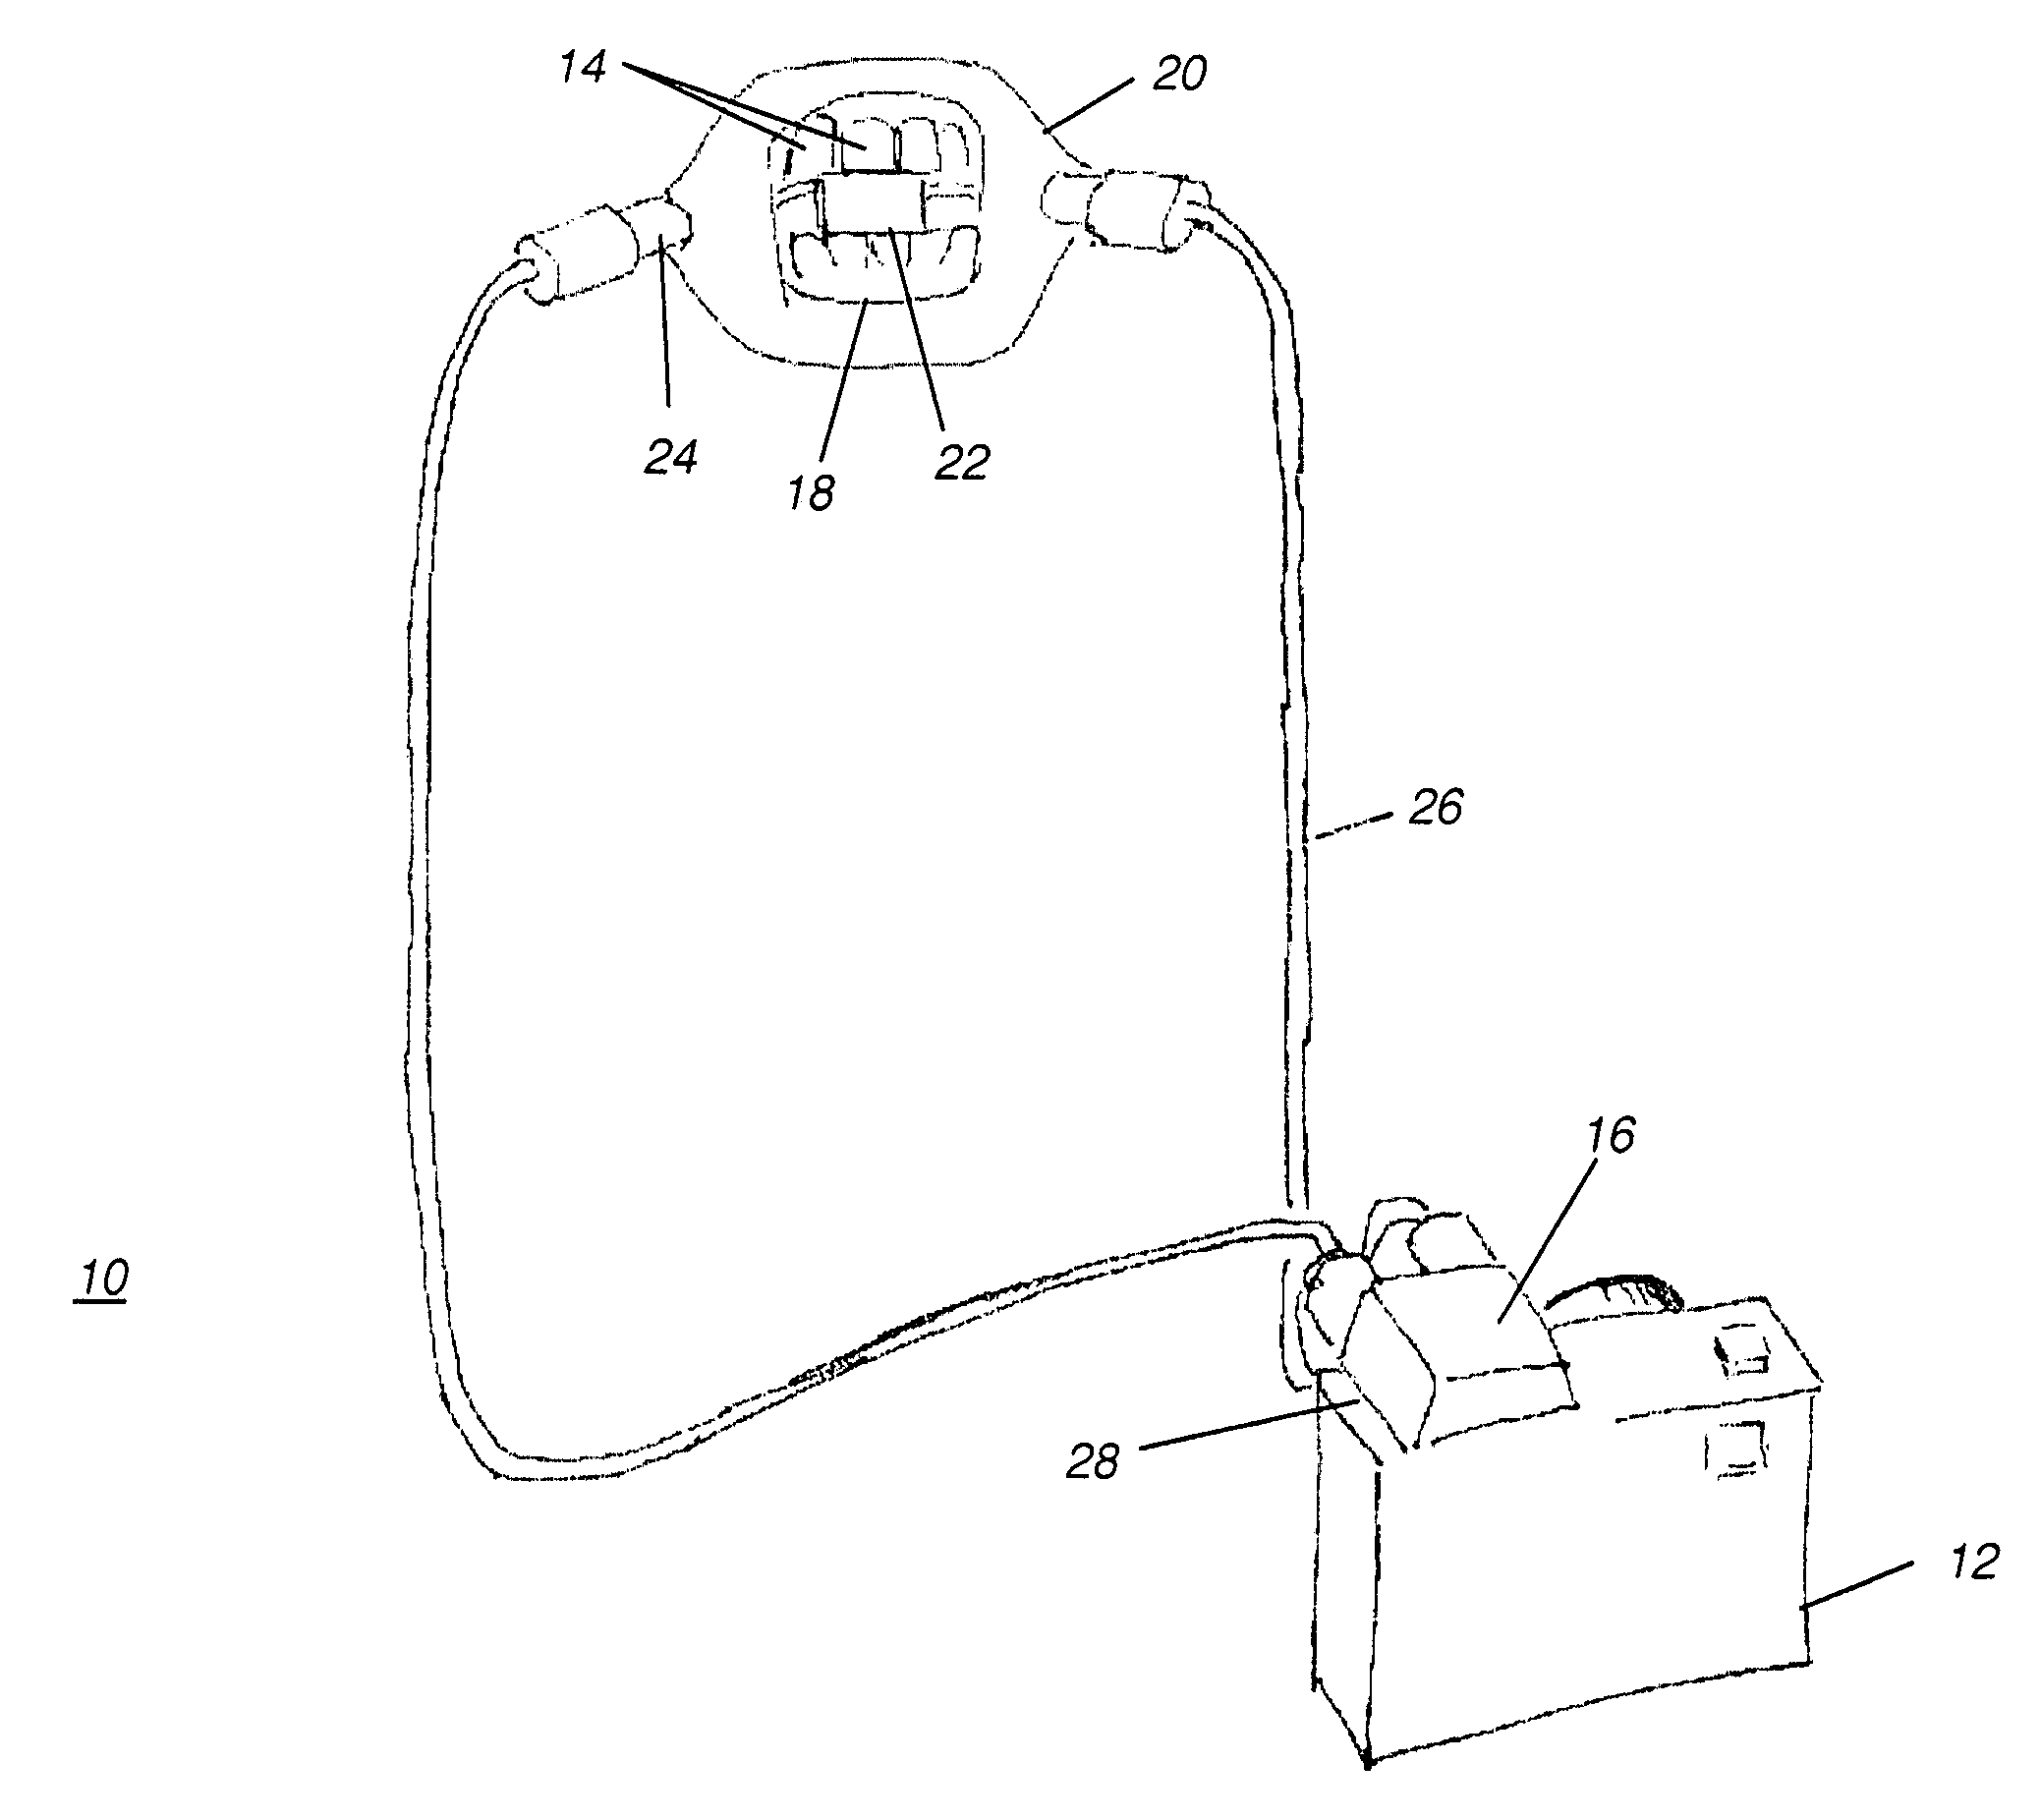 Apparatus for dental shade measurement